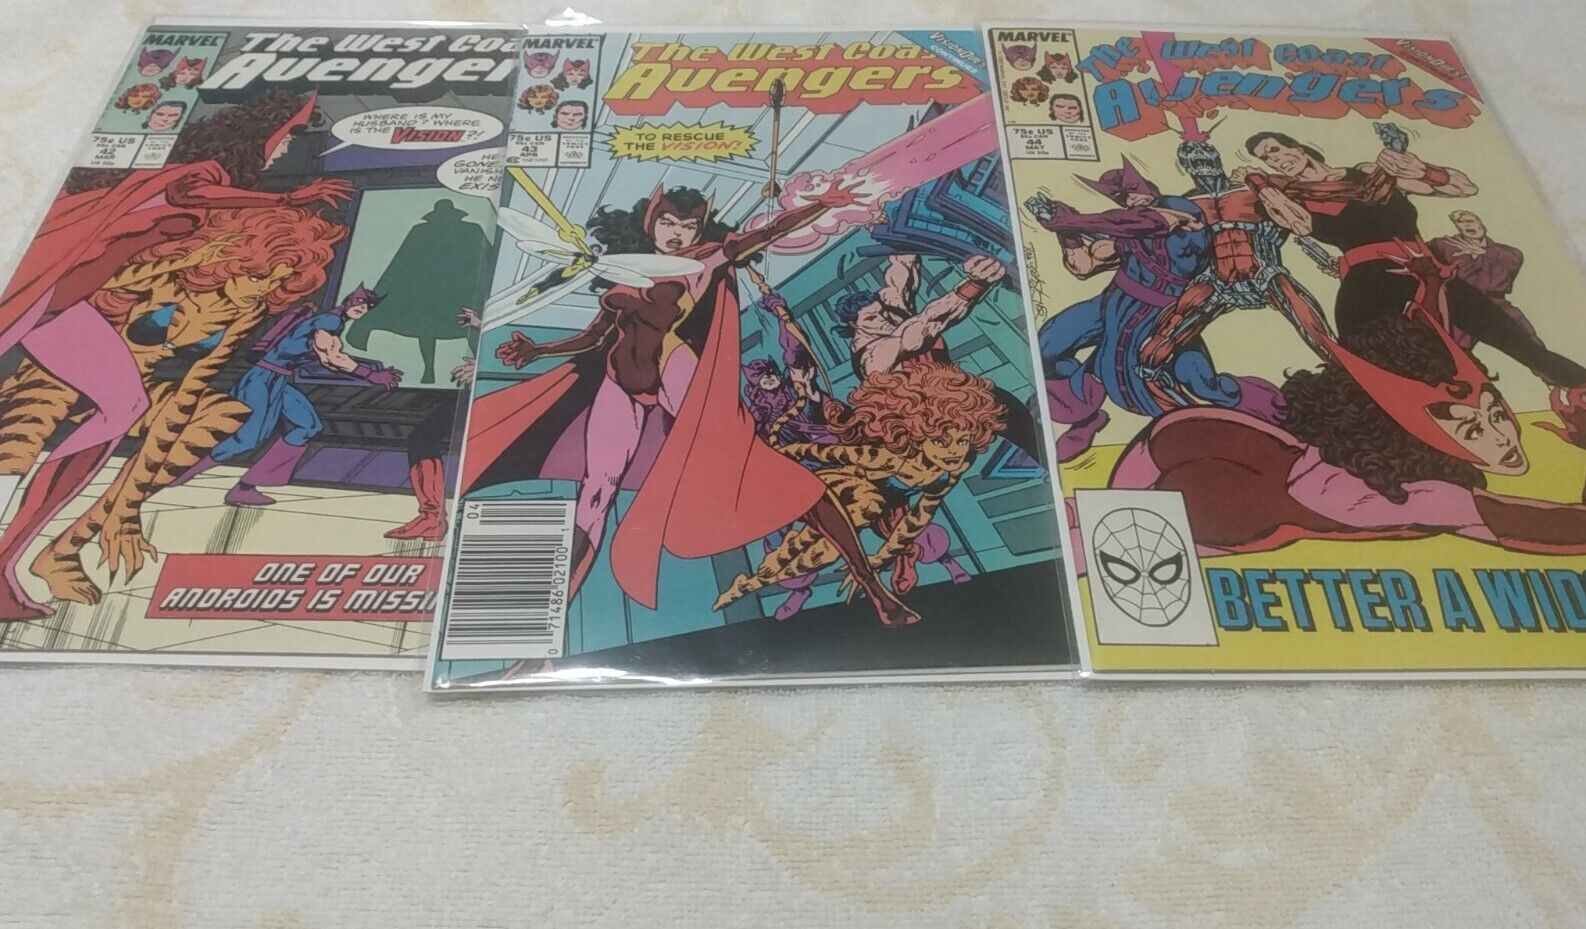 West Coast Avengers #42, 43, 44 Vision Quest - Byrne. High Grade Unread